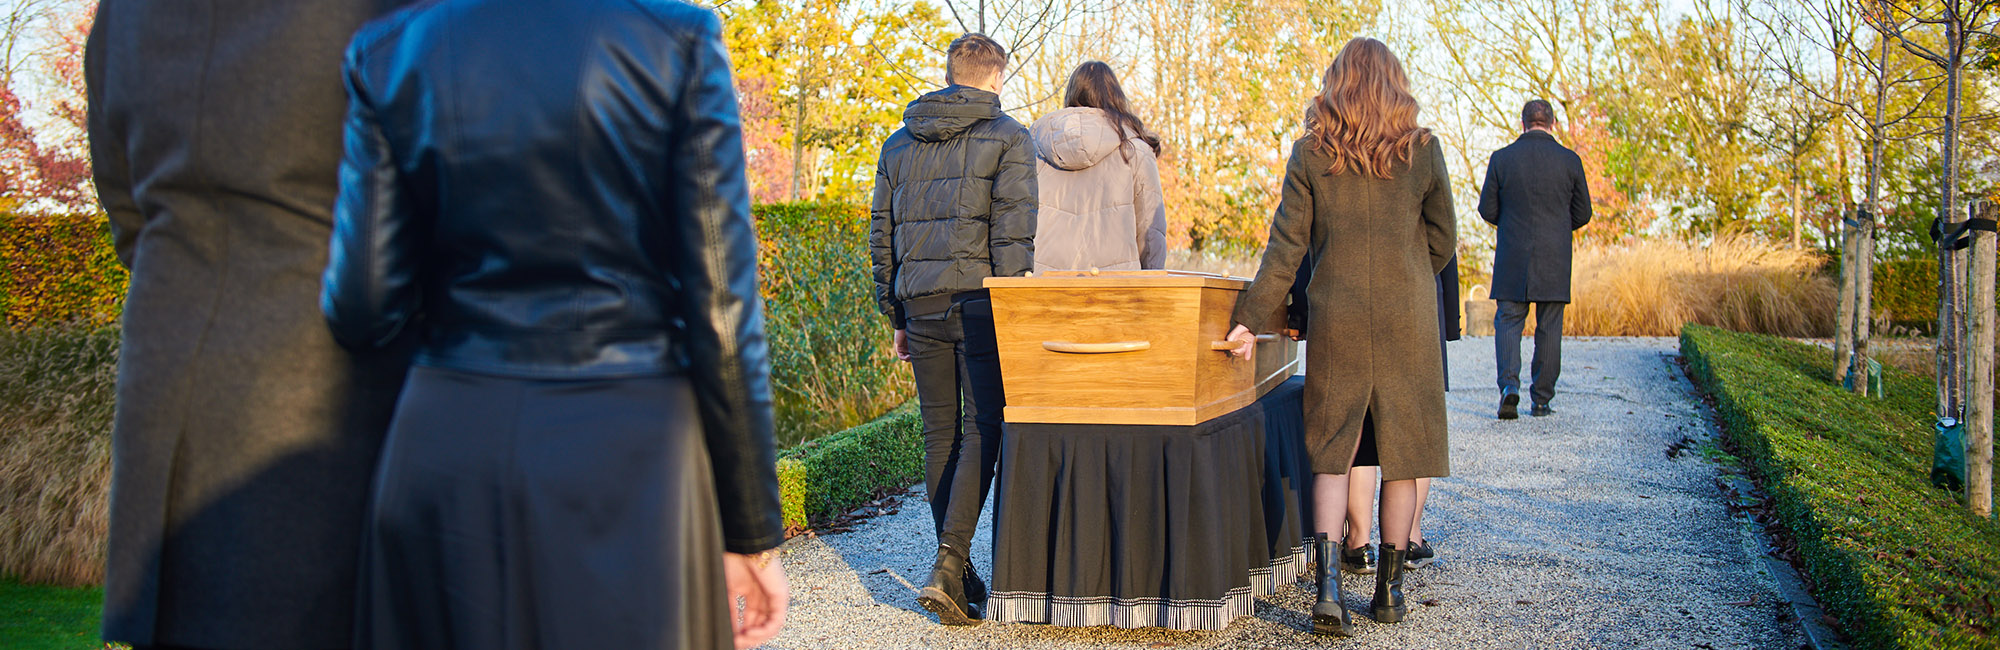 Wevers begrafenis